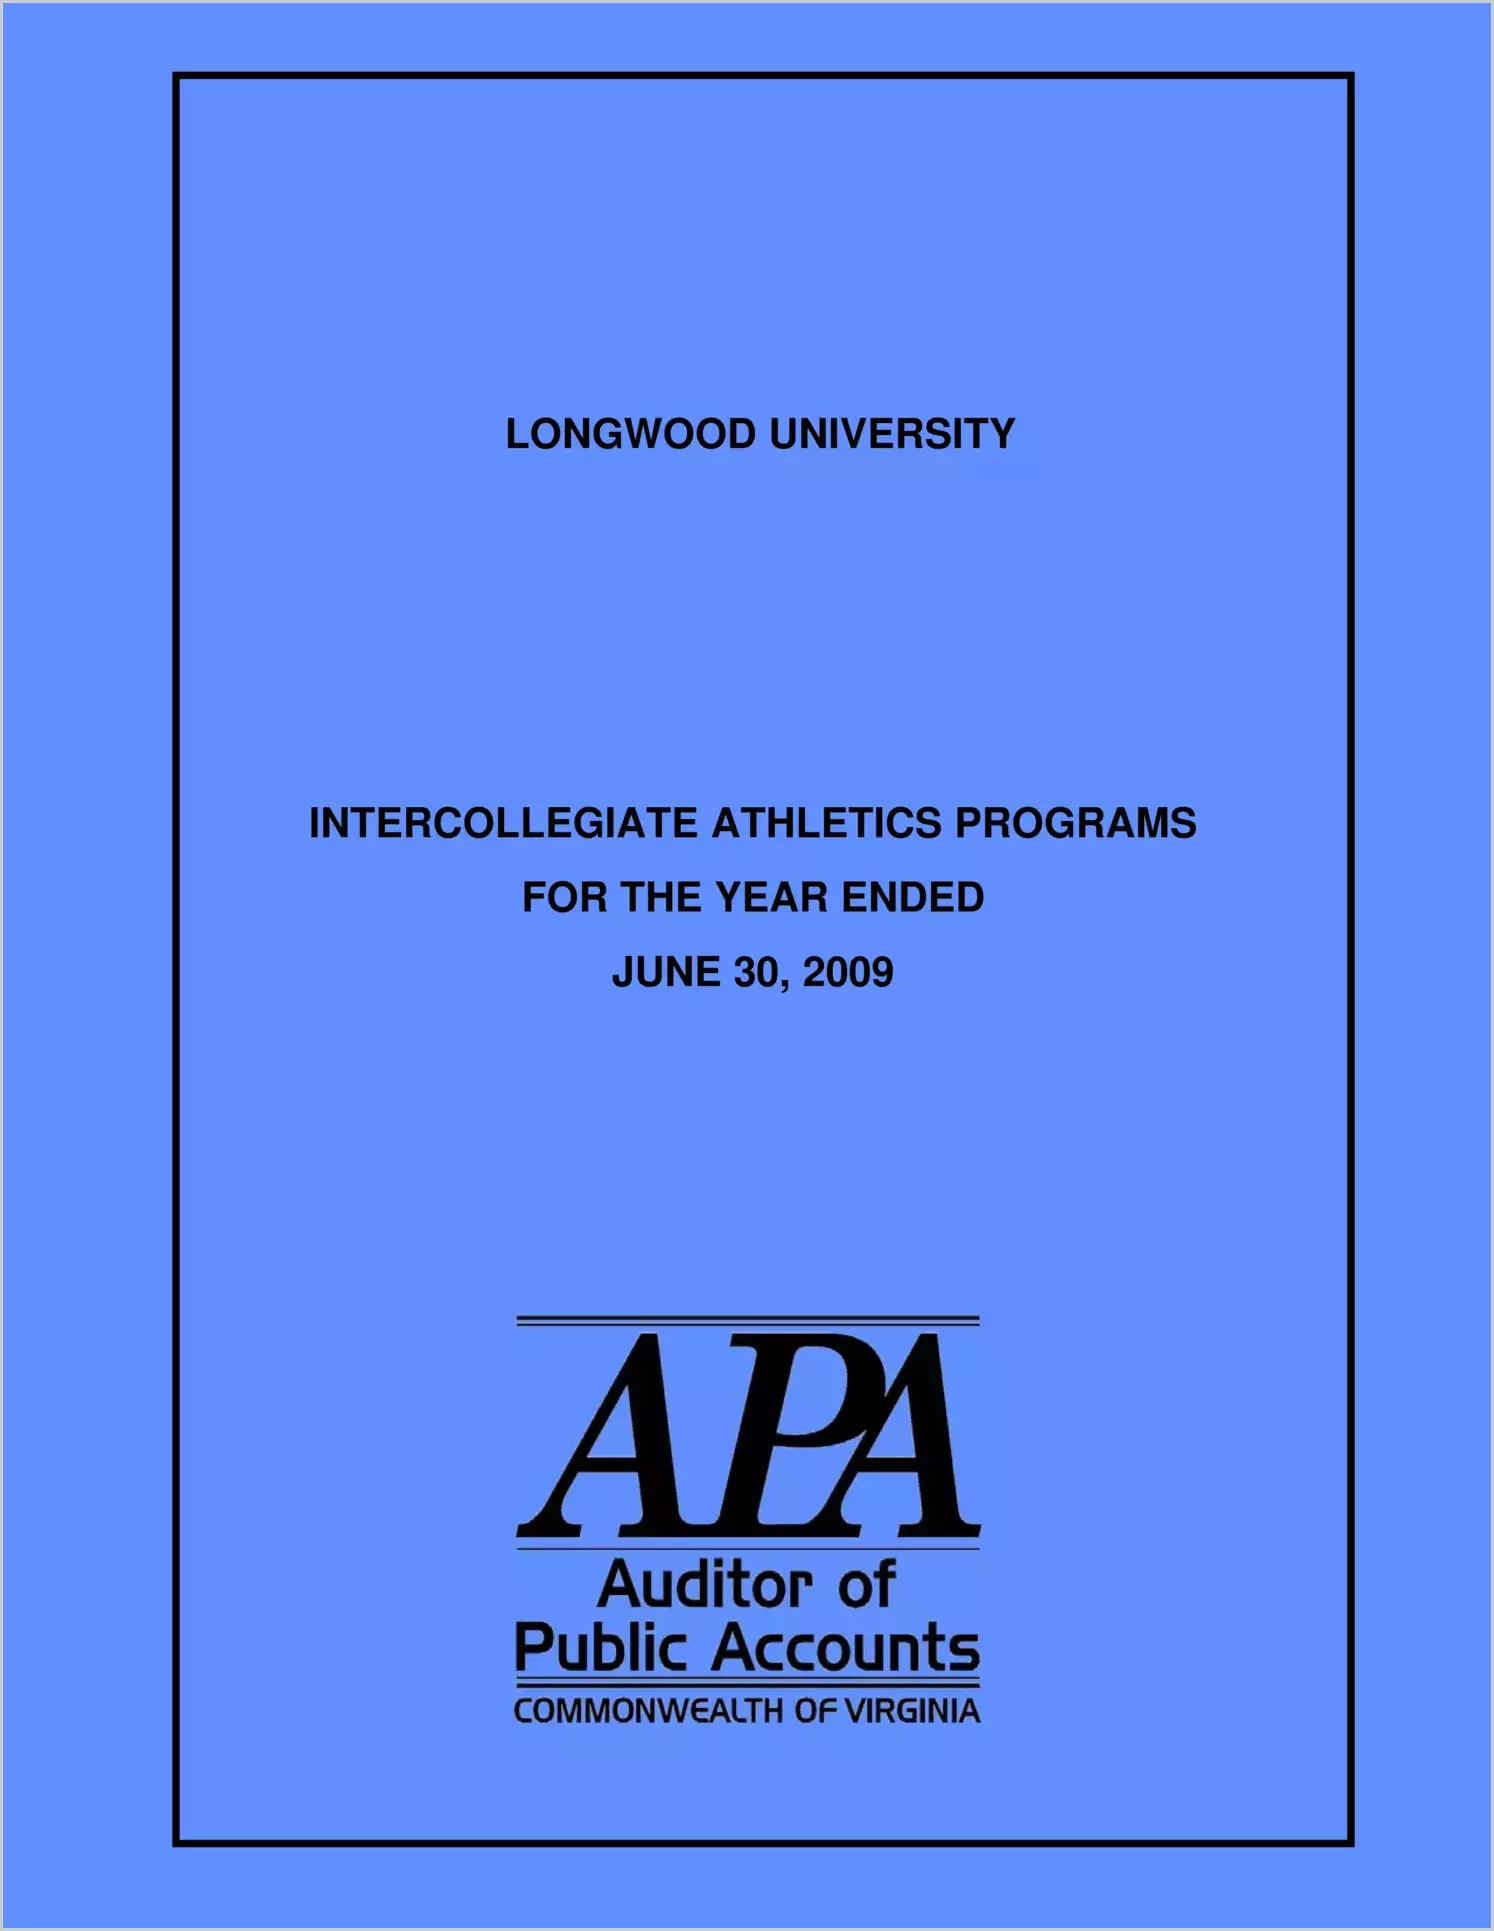 Longwood University Intercollegiate Athletics Programs for the year ended June 30, 2009